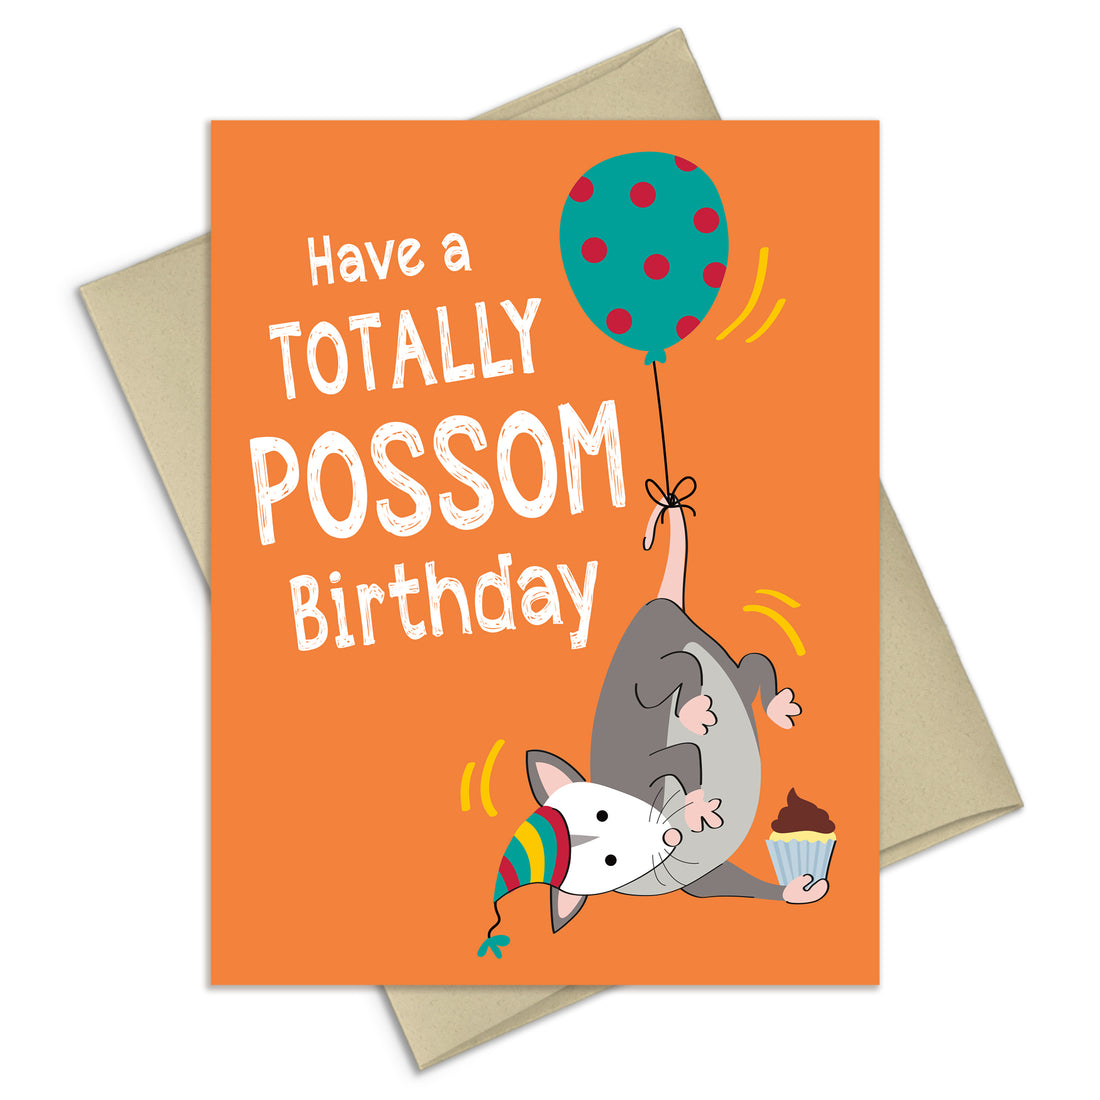 Birthday Card - Totally Possom Birthday